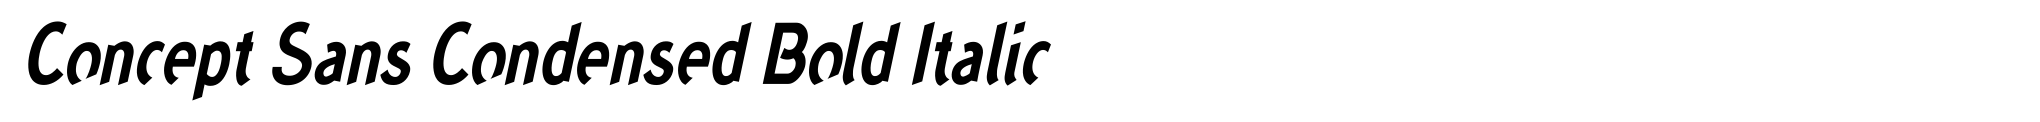 Concept Sans Condensed Bold Italic image